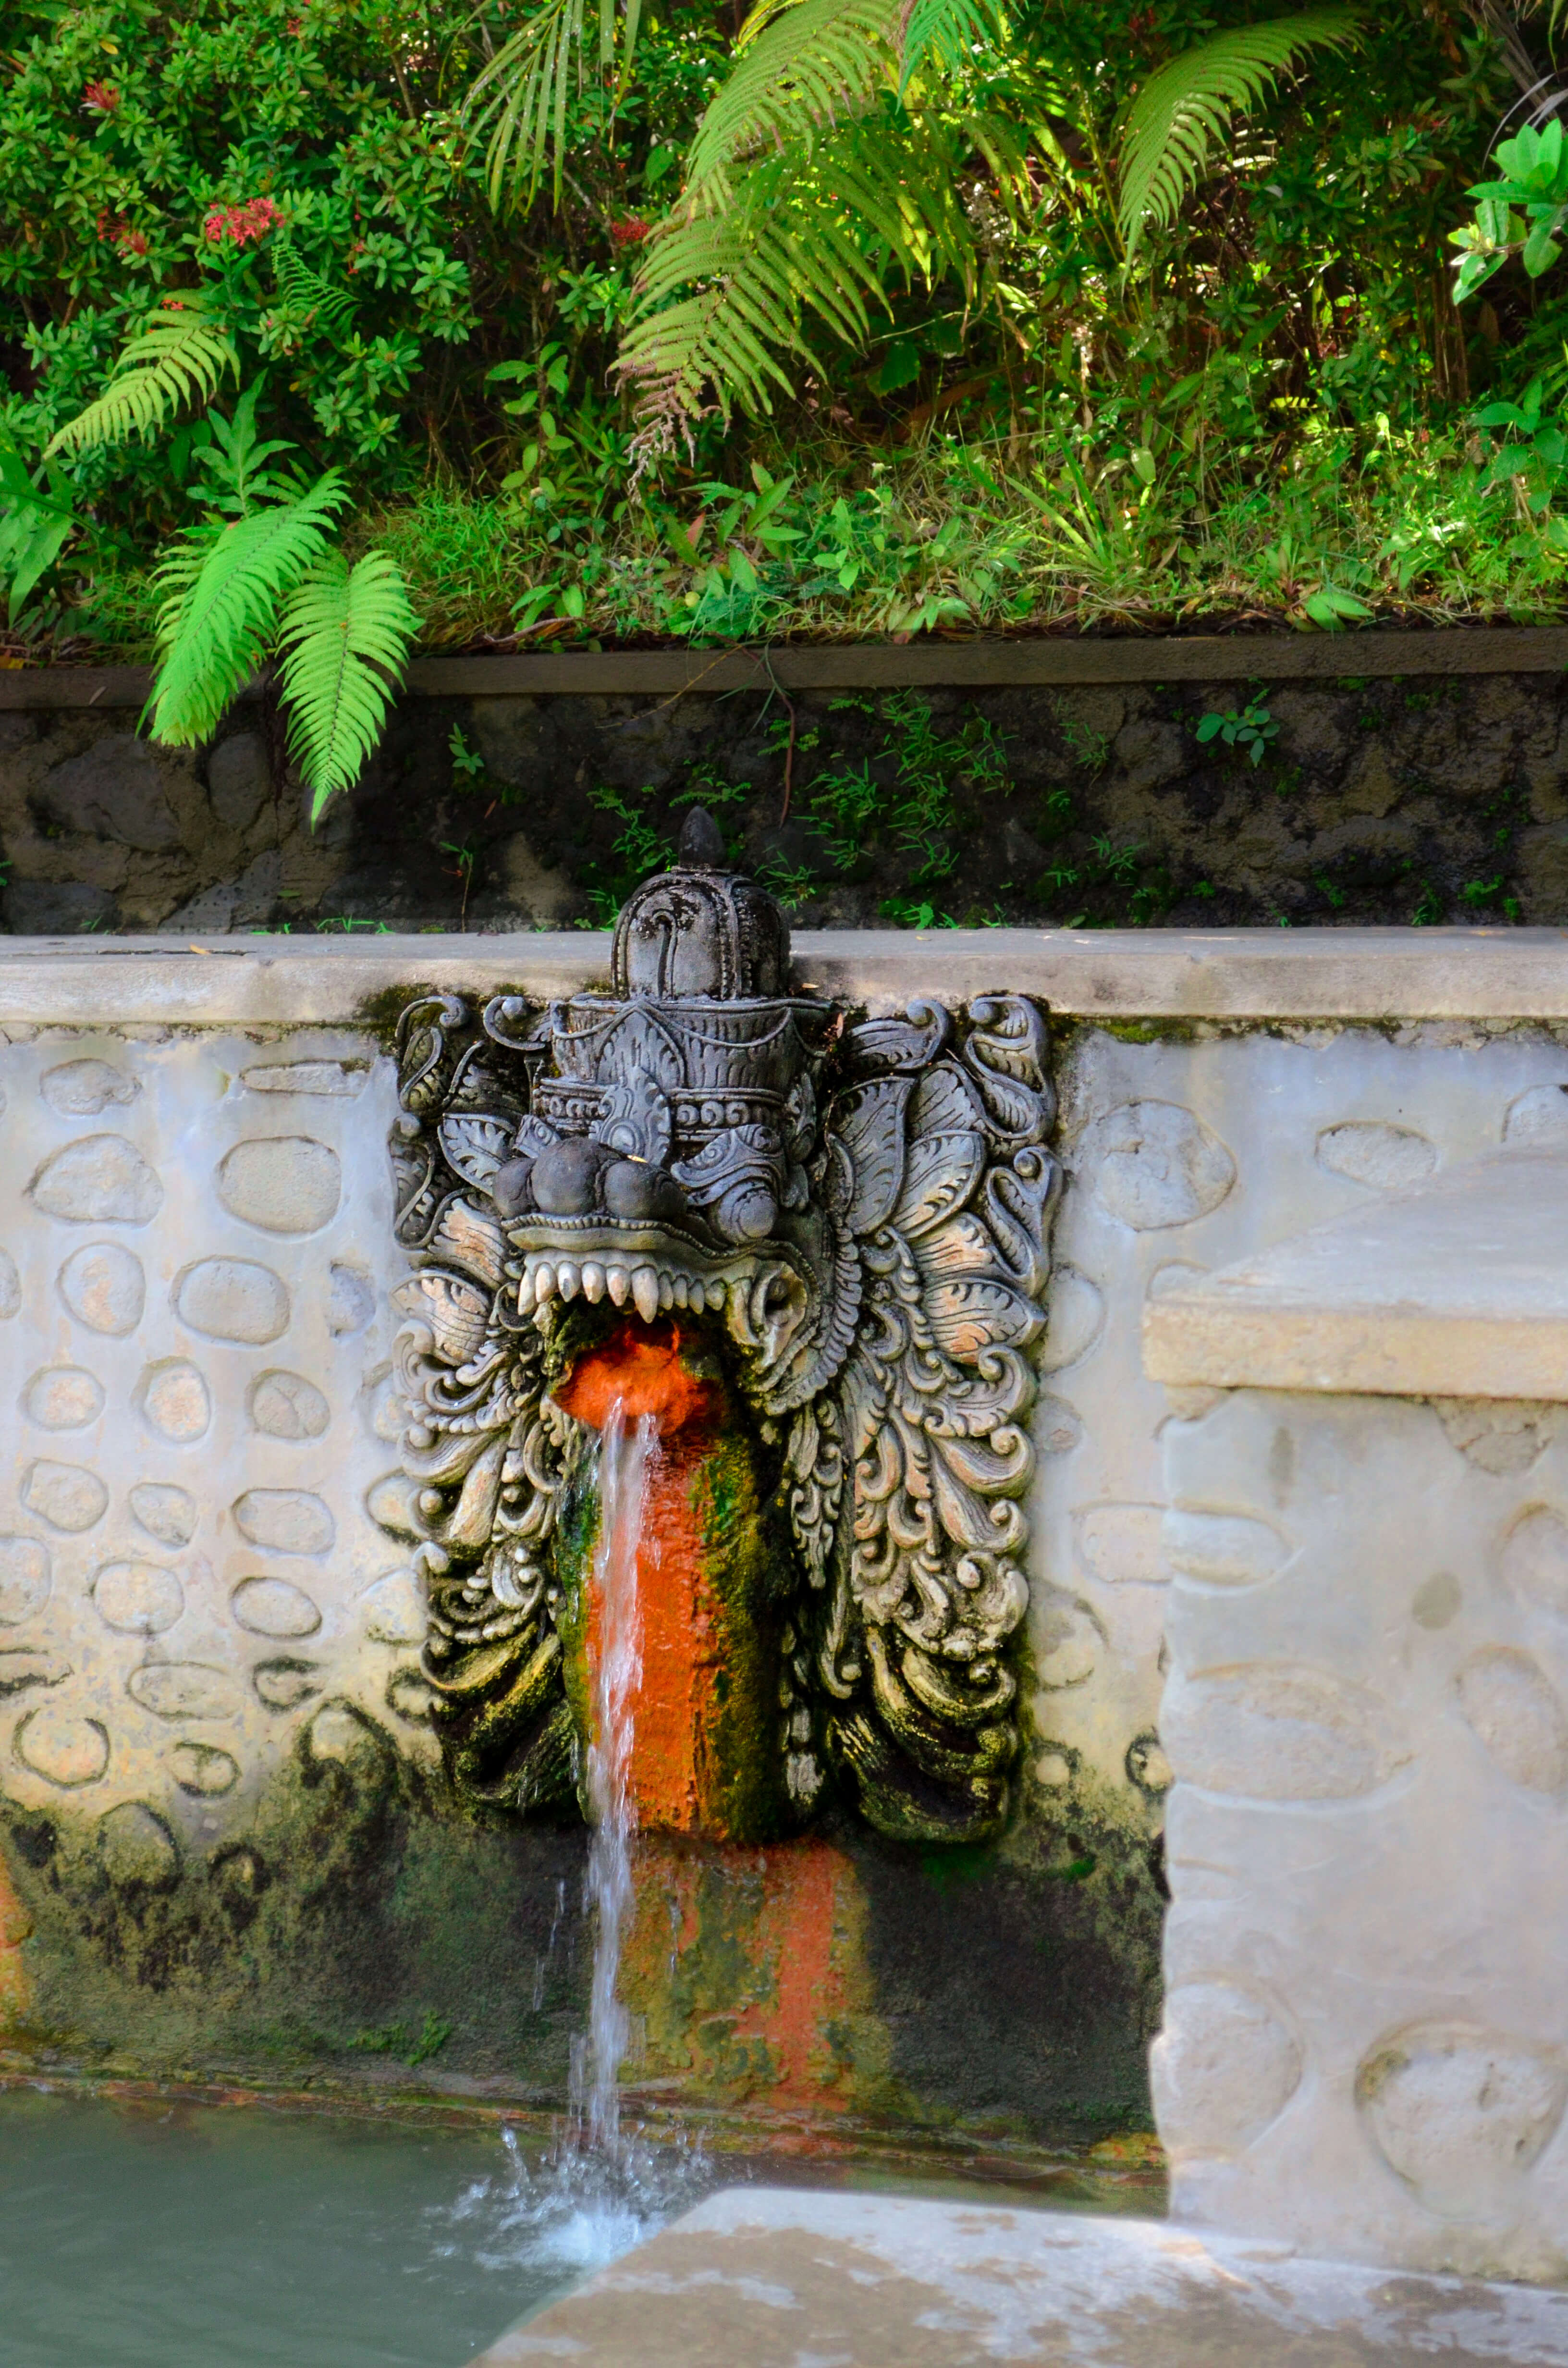 Bali Golden Tour - Banjar hot springs in Northern Bali, Indonesia